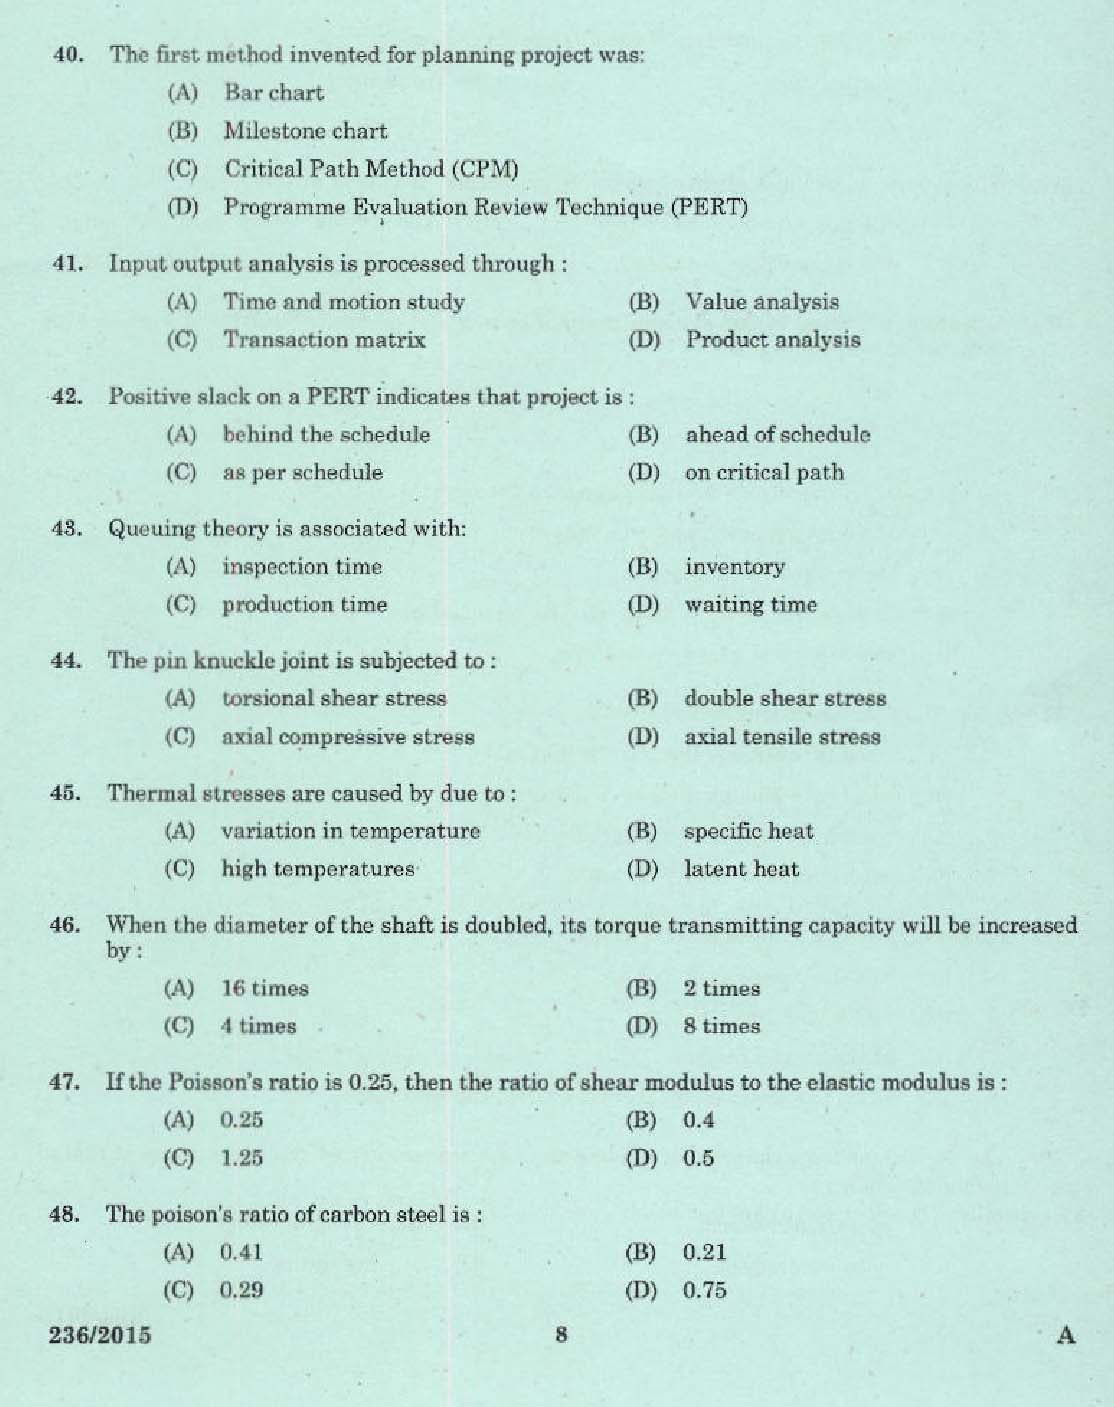 Kerala PSC Foreman Exam 2015 Question Paper Code 2362015 6